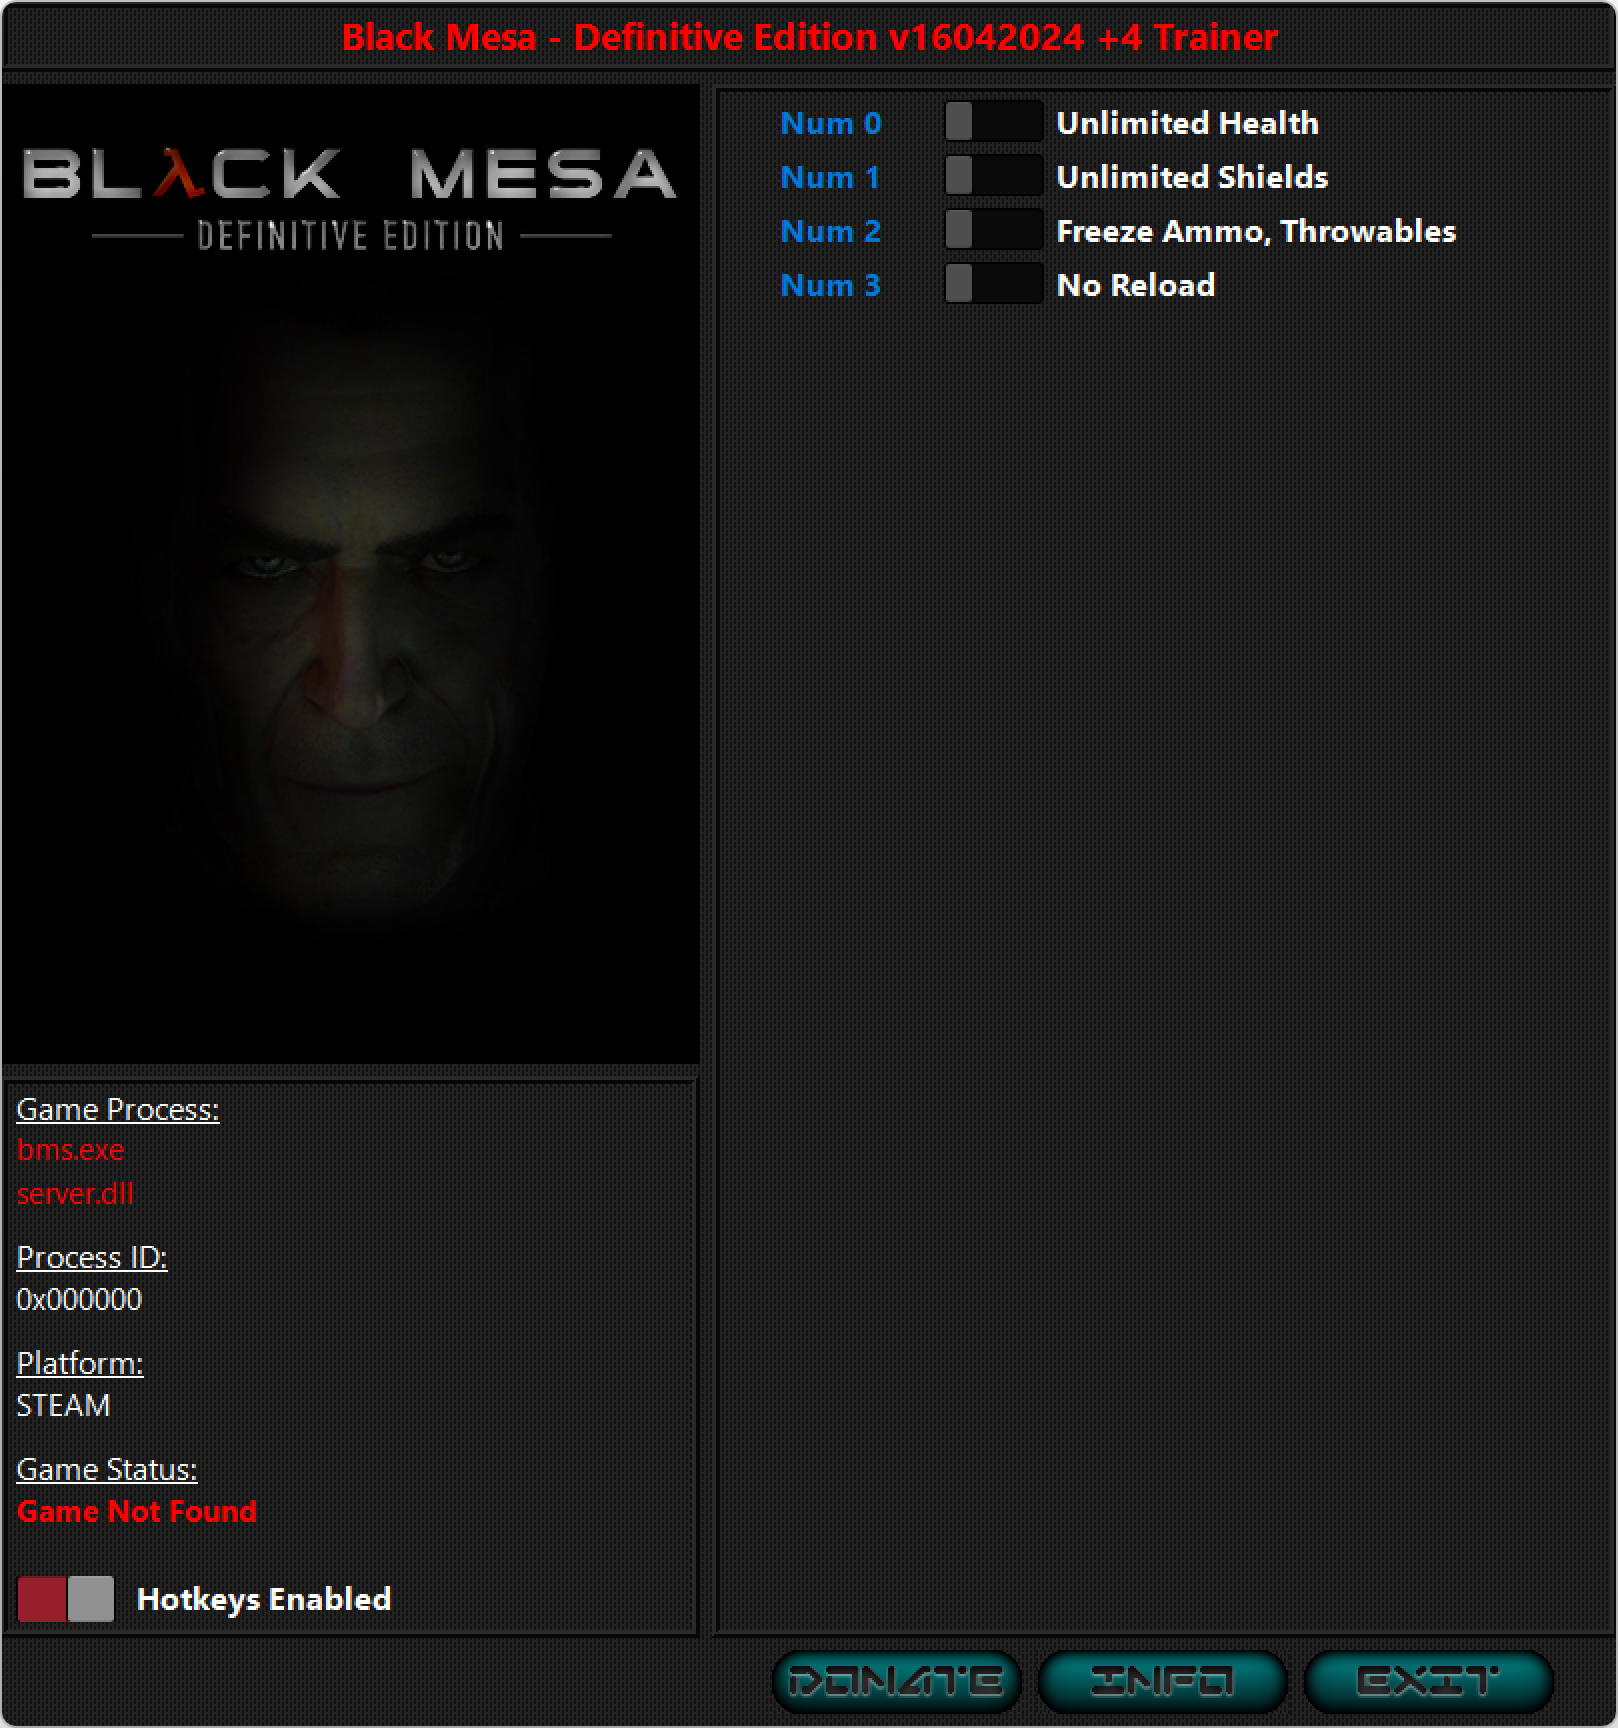 Black Mesa: Definitive Edition v16042024 Trainer +4